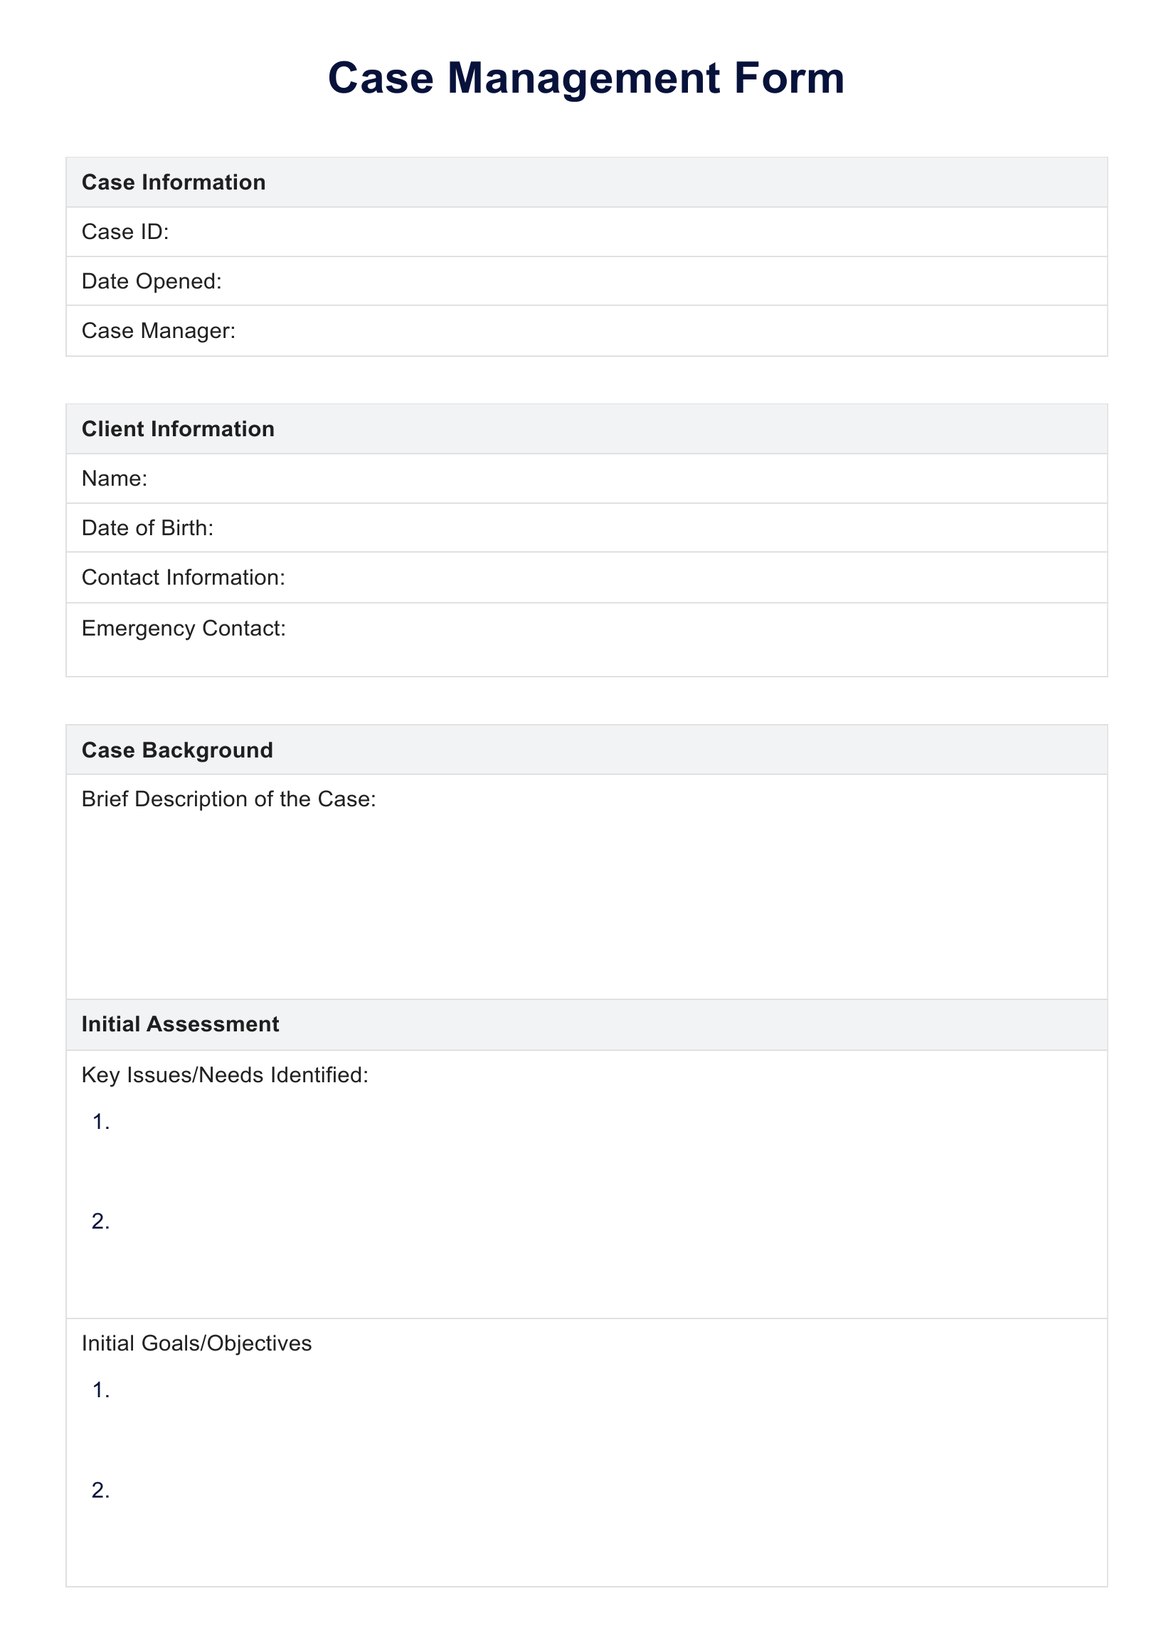 Case Management Form PDF Example